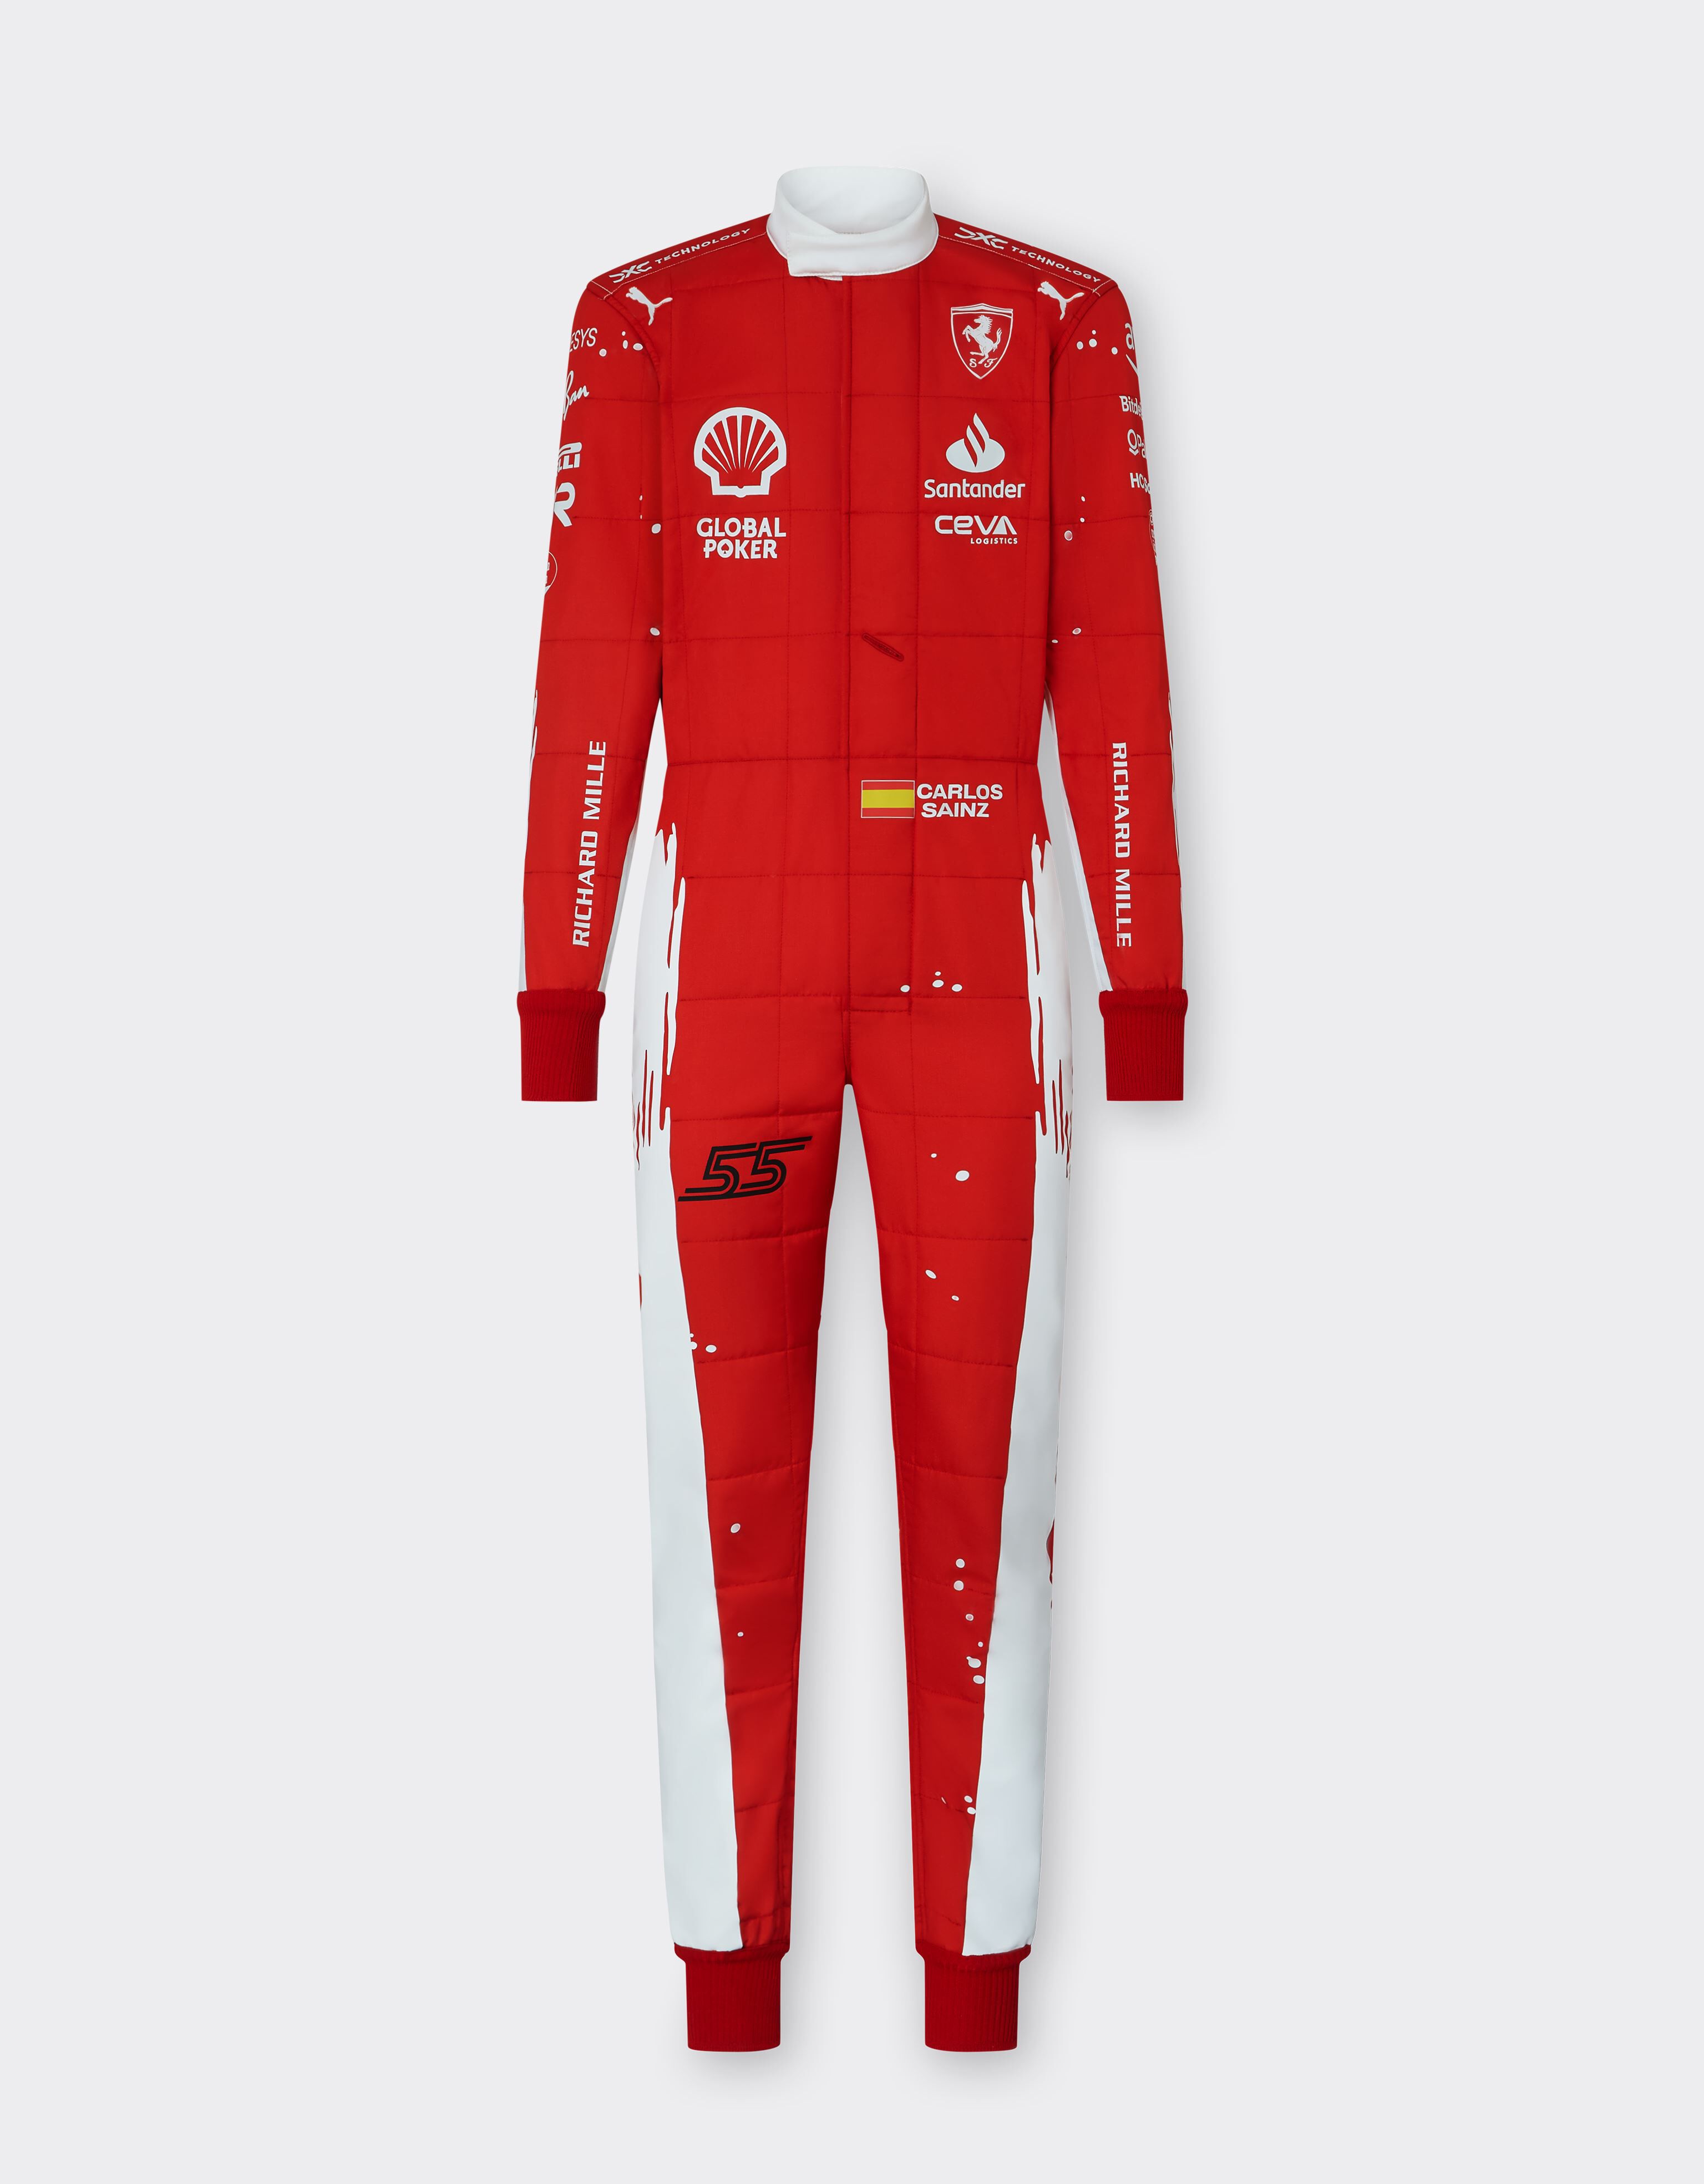 Ferrari Puma for Scuderia Ferrari カルロス・サインツ F1 PRO スーツ - ジョシュア・ヴィーダス マルチカラー F1067f